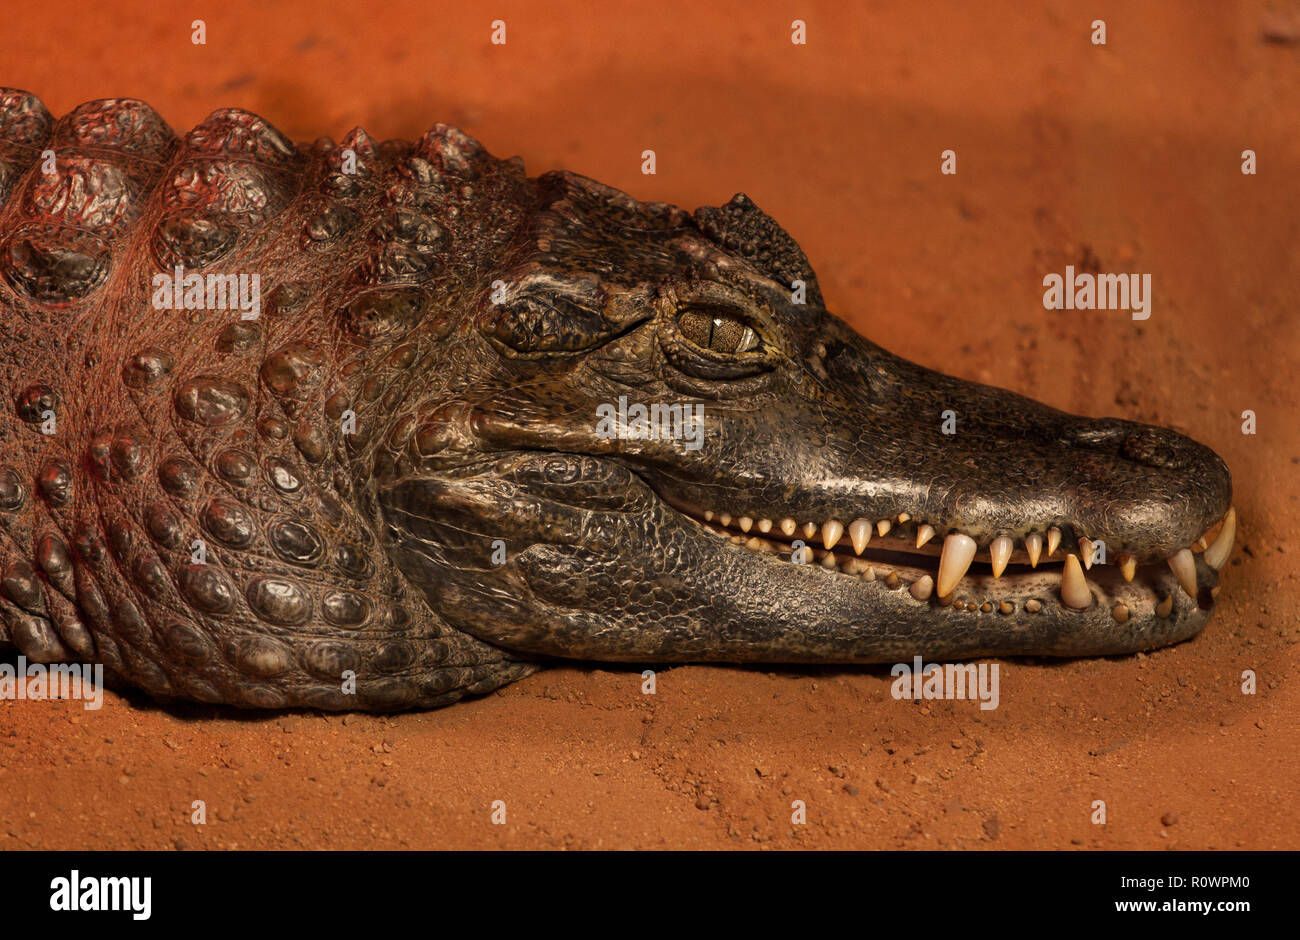 caiman alligator Stock Photo